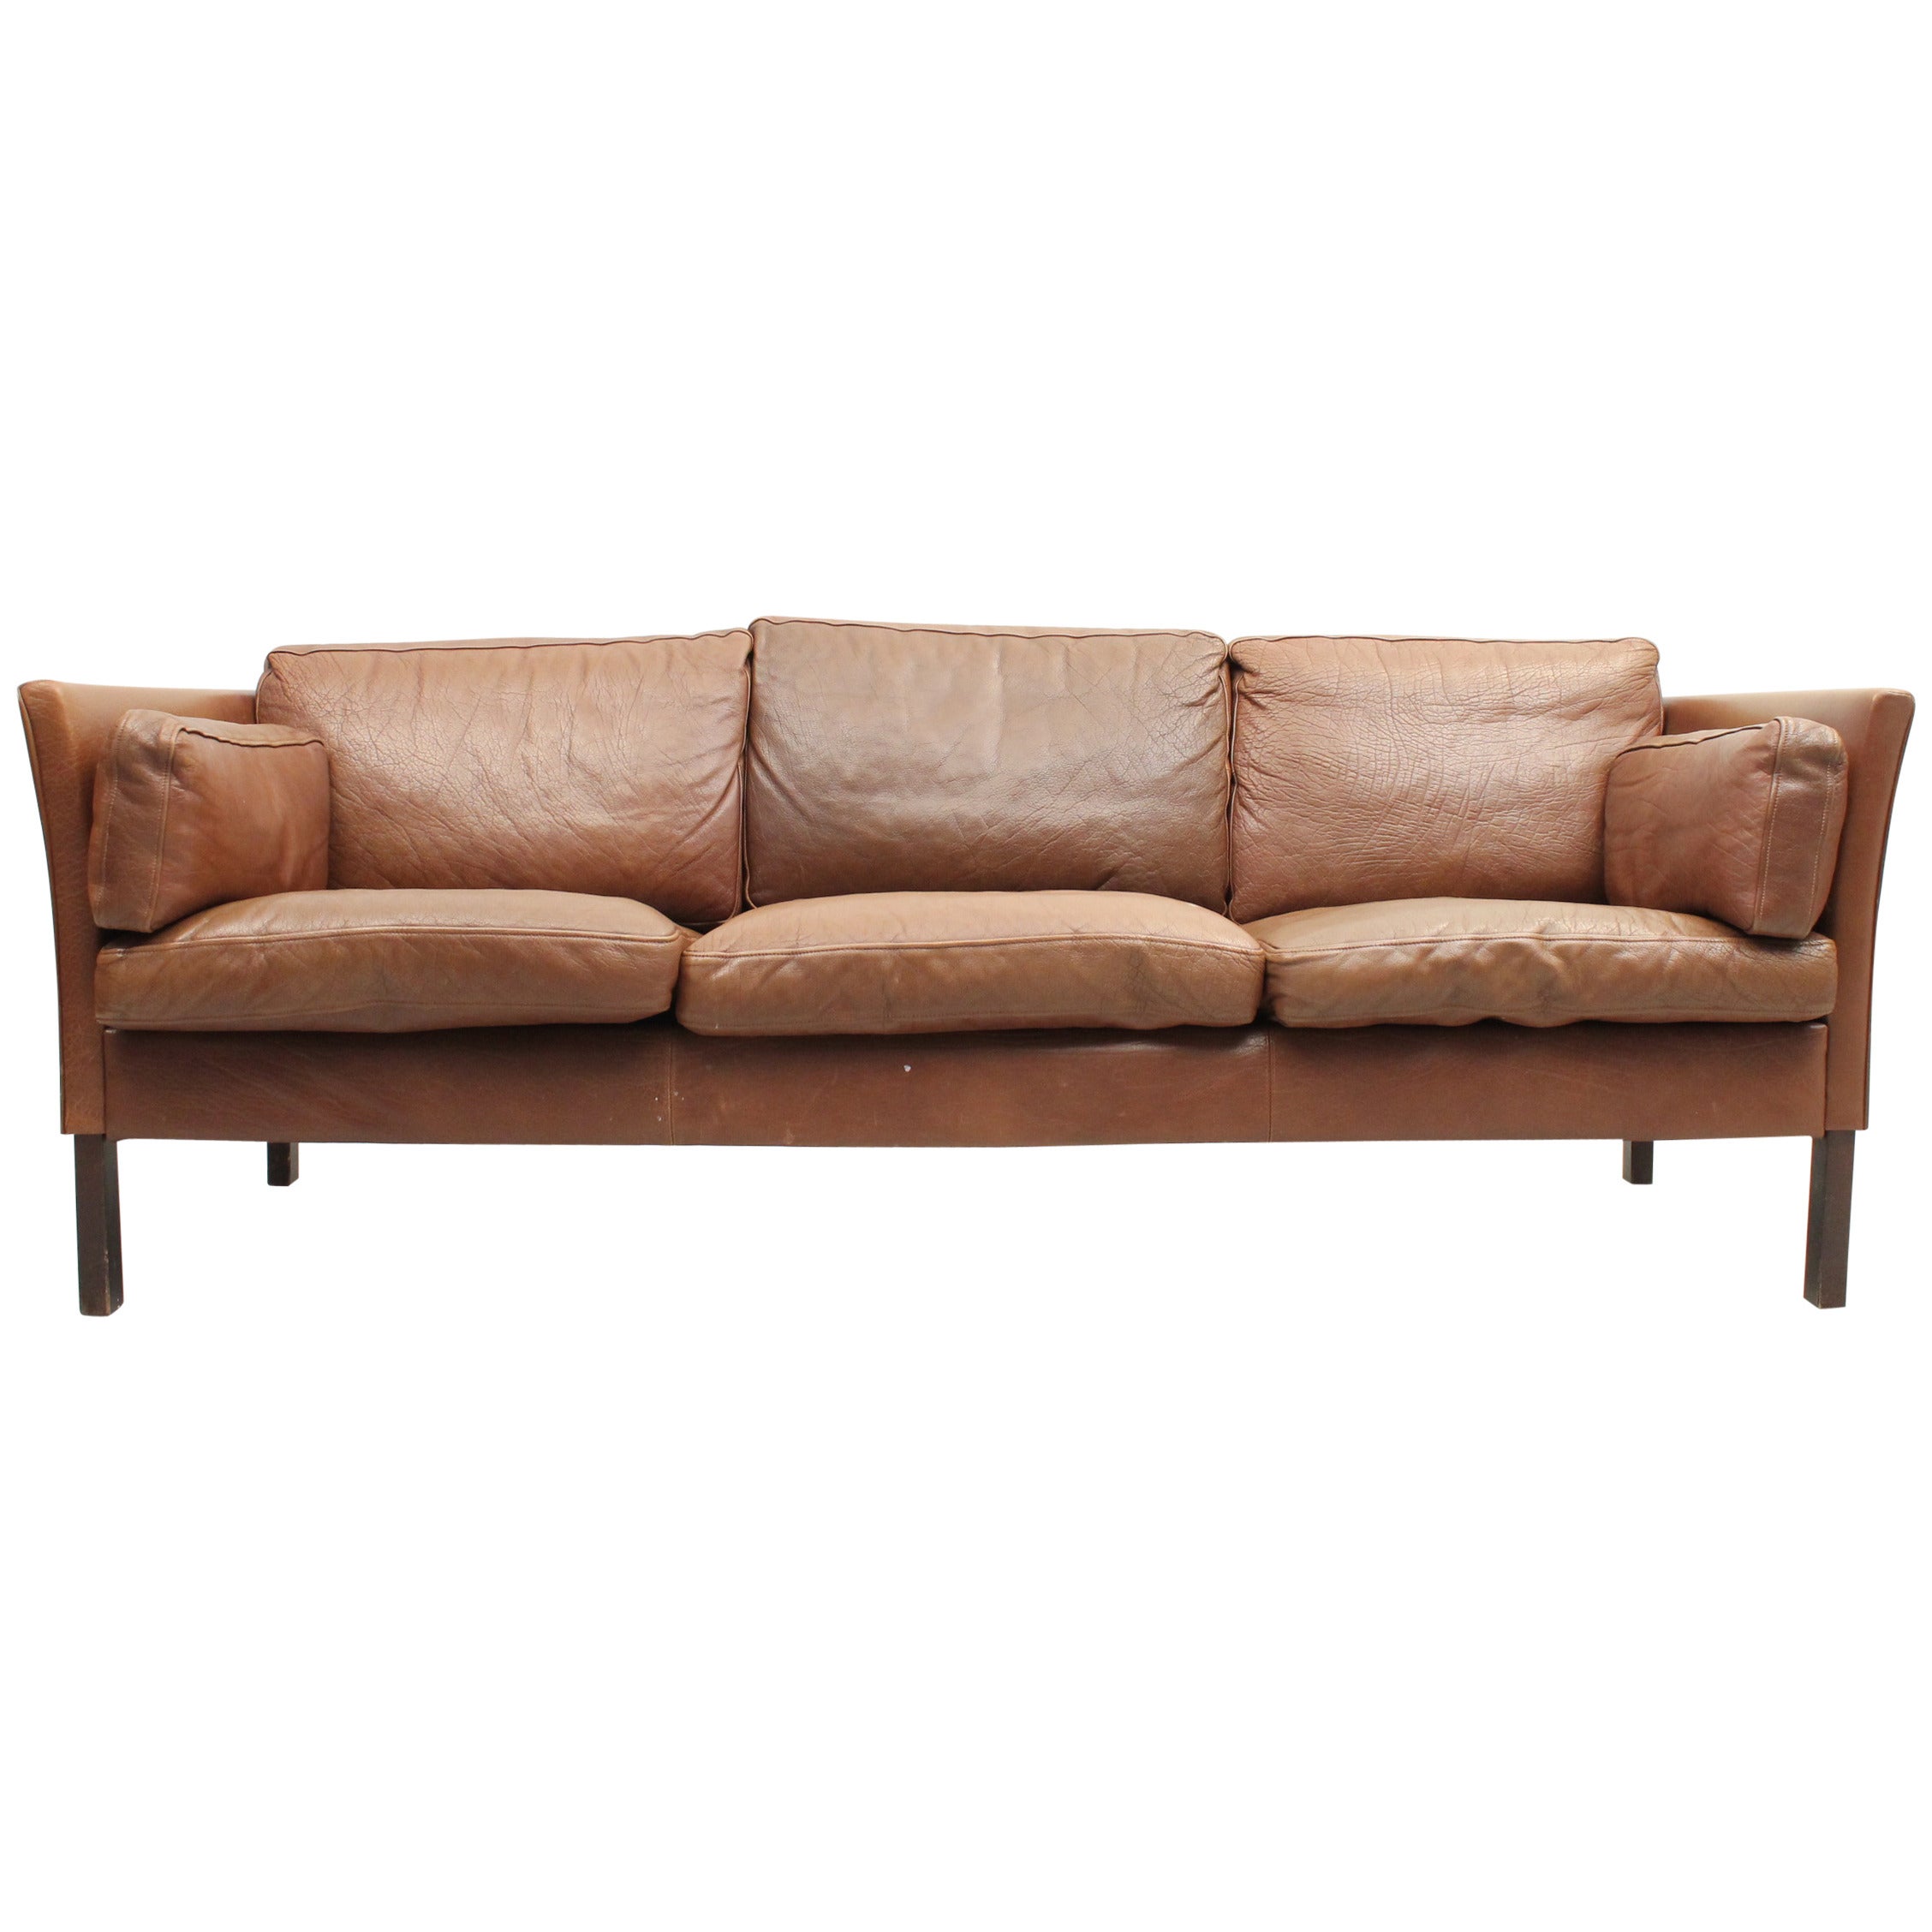 Danish Mid Century Modern Leather Sofa